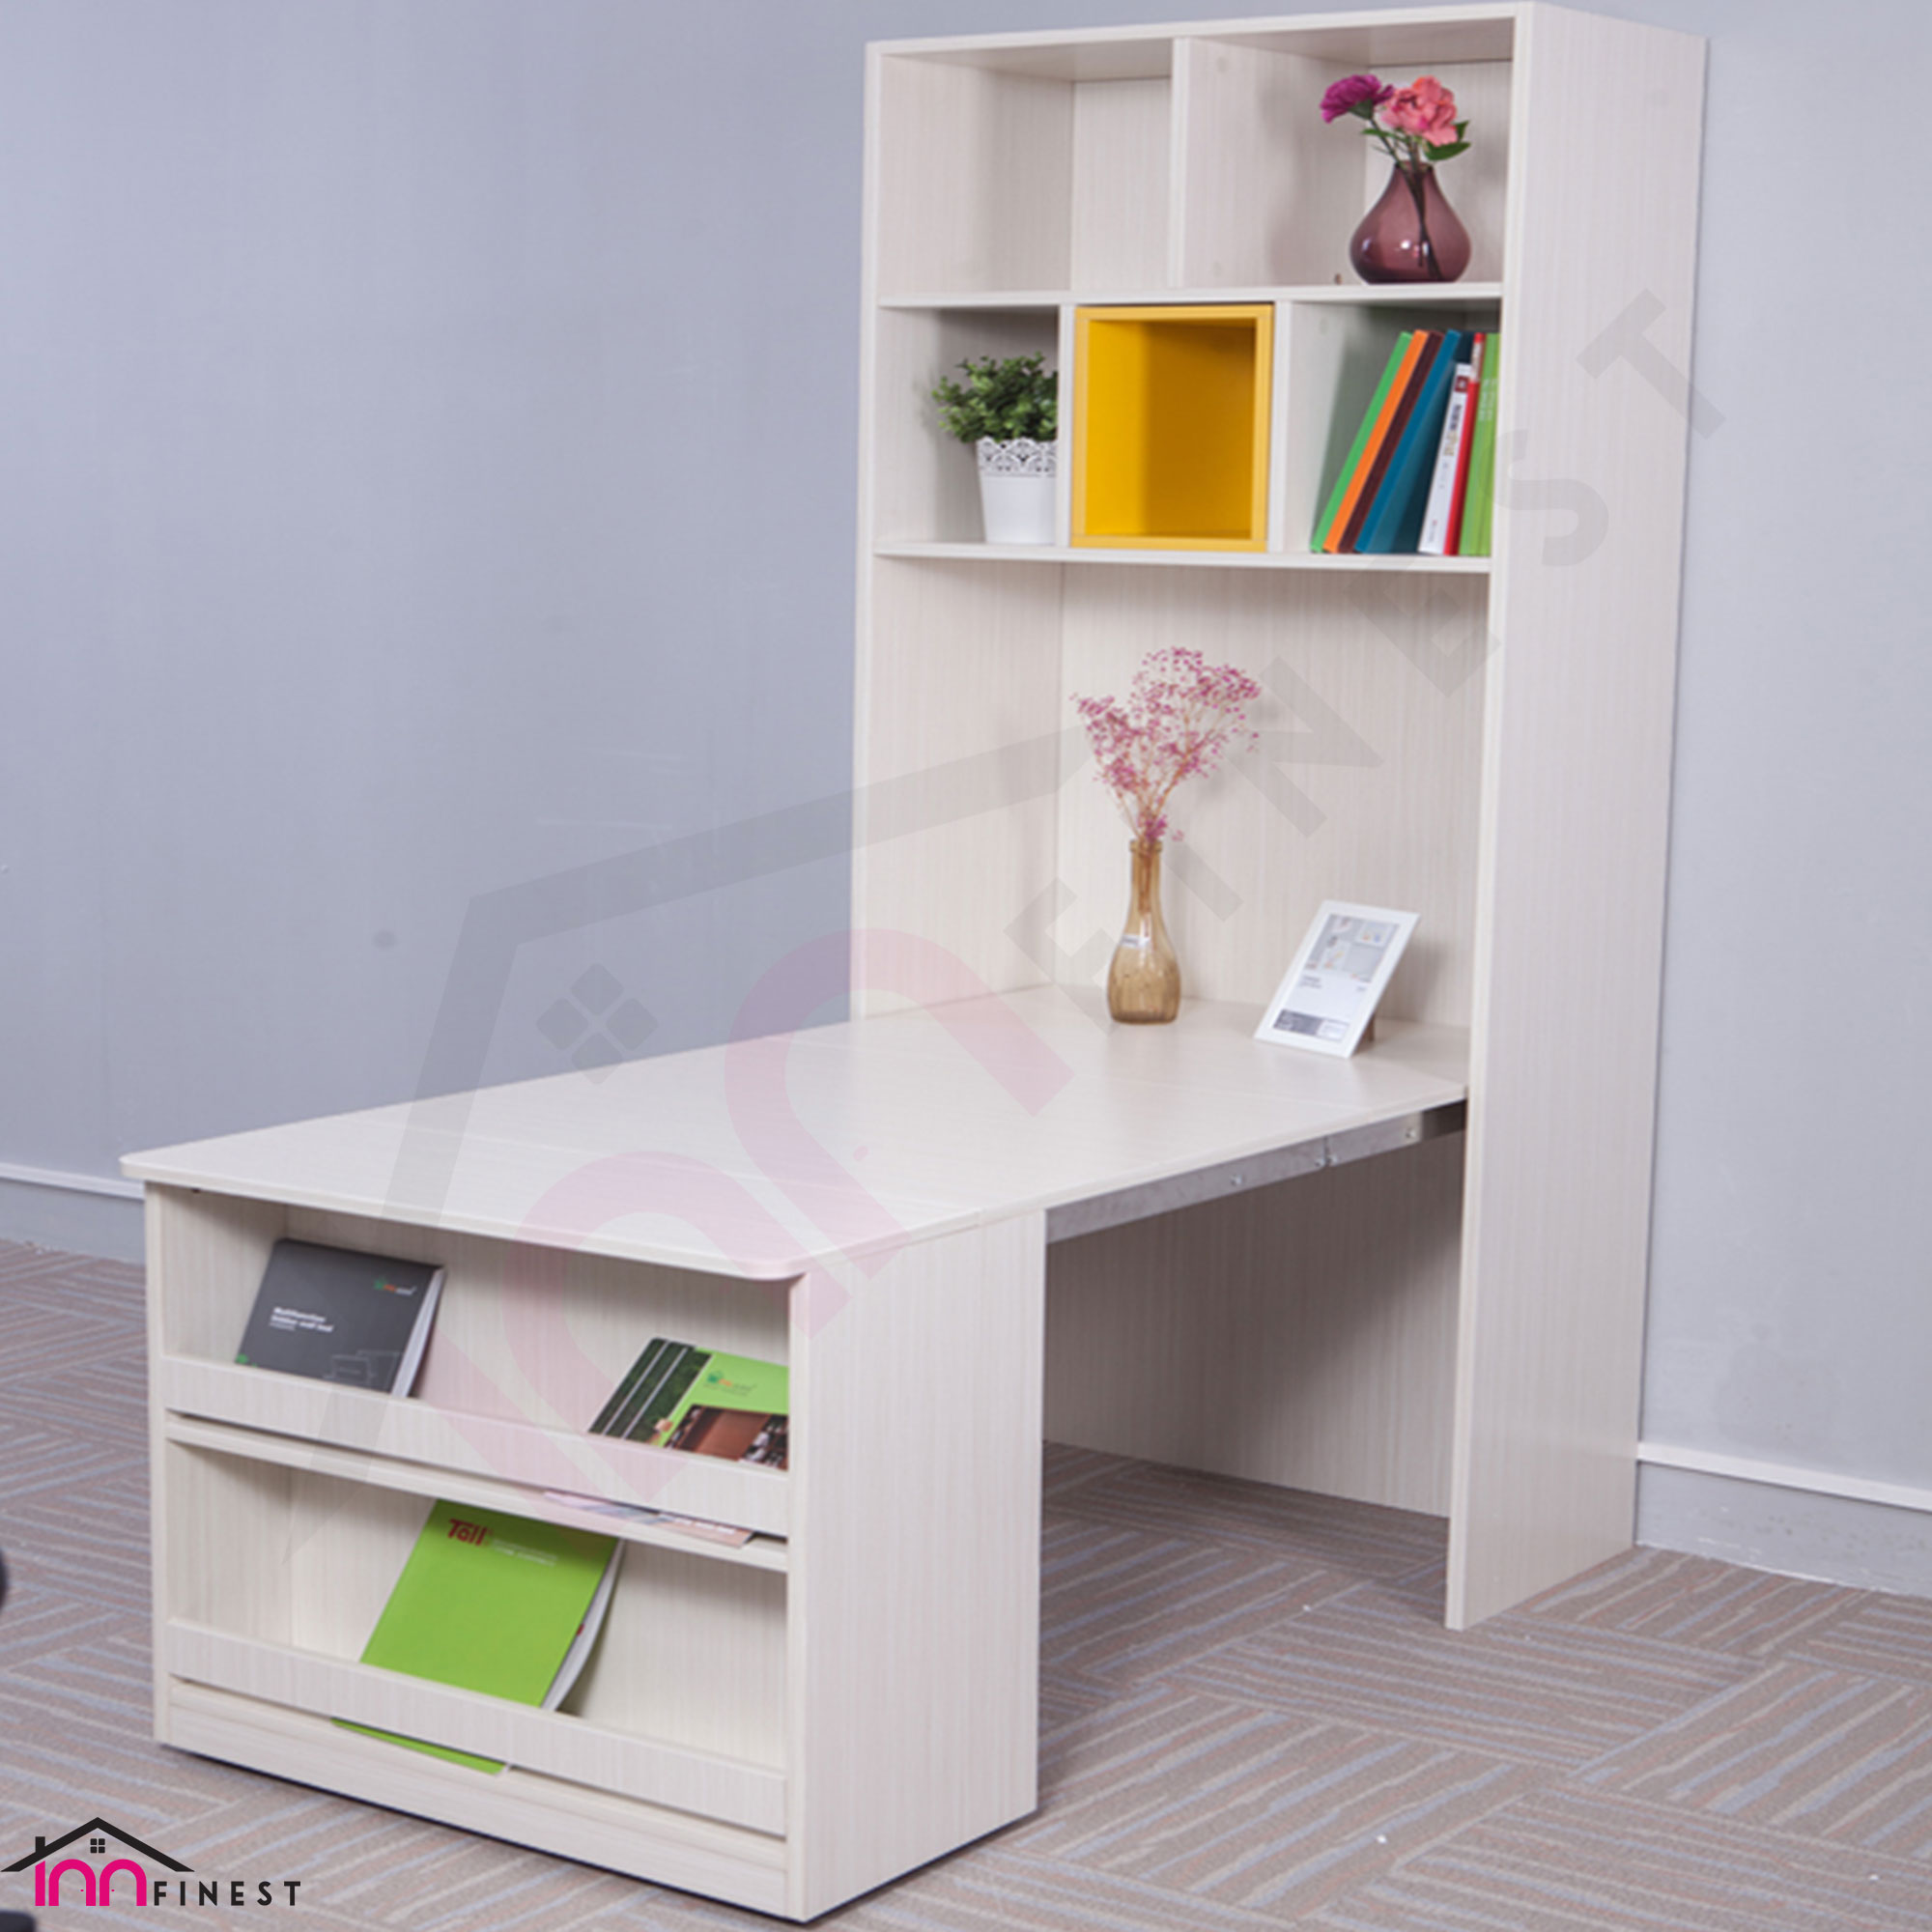 Extending cabinet table bookshelf space saving